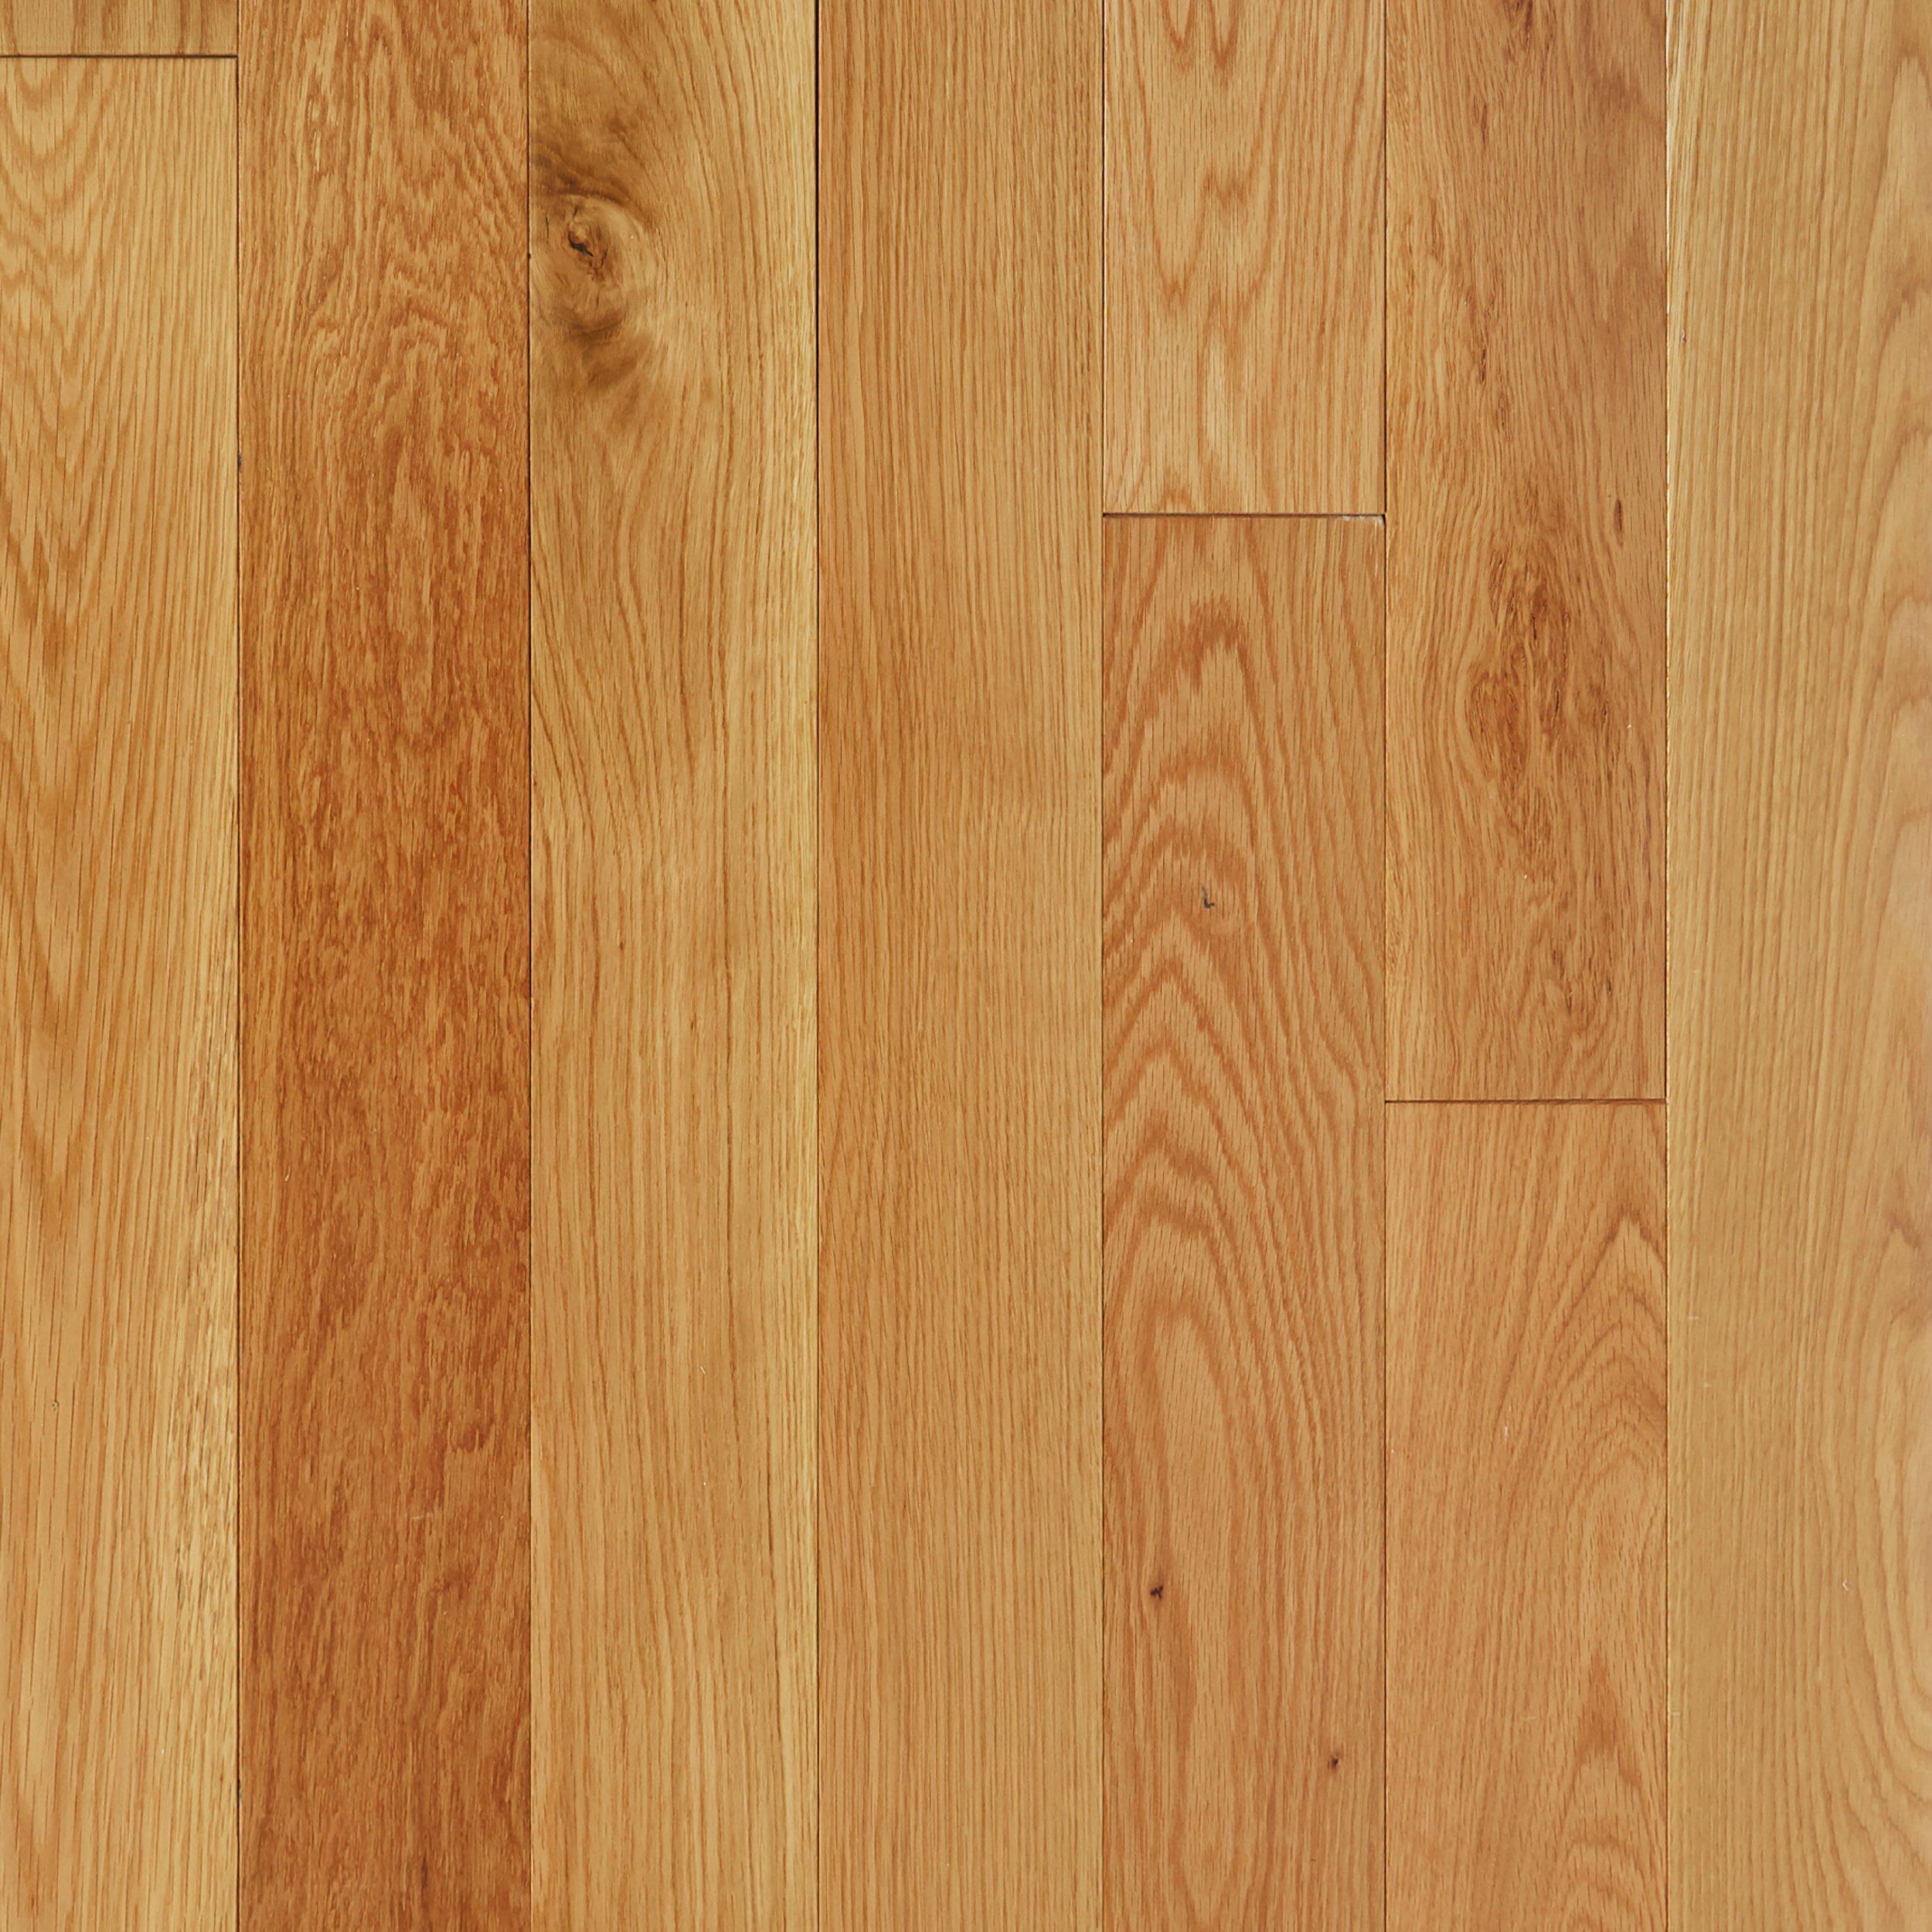 Natural White Oak Smooth Solid Hardwood, Natural White Oak Hardwood Flooring Pictures